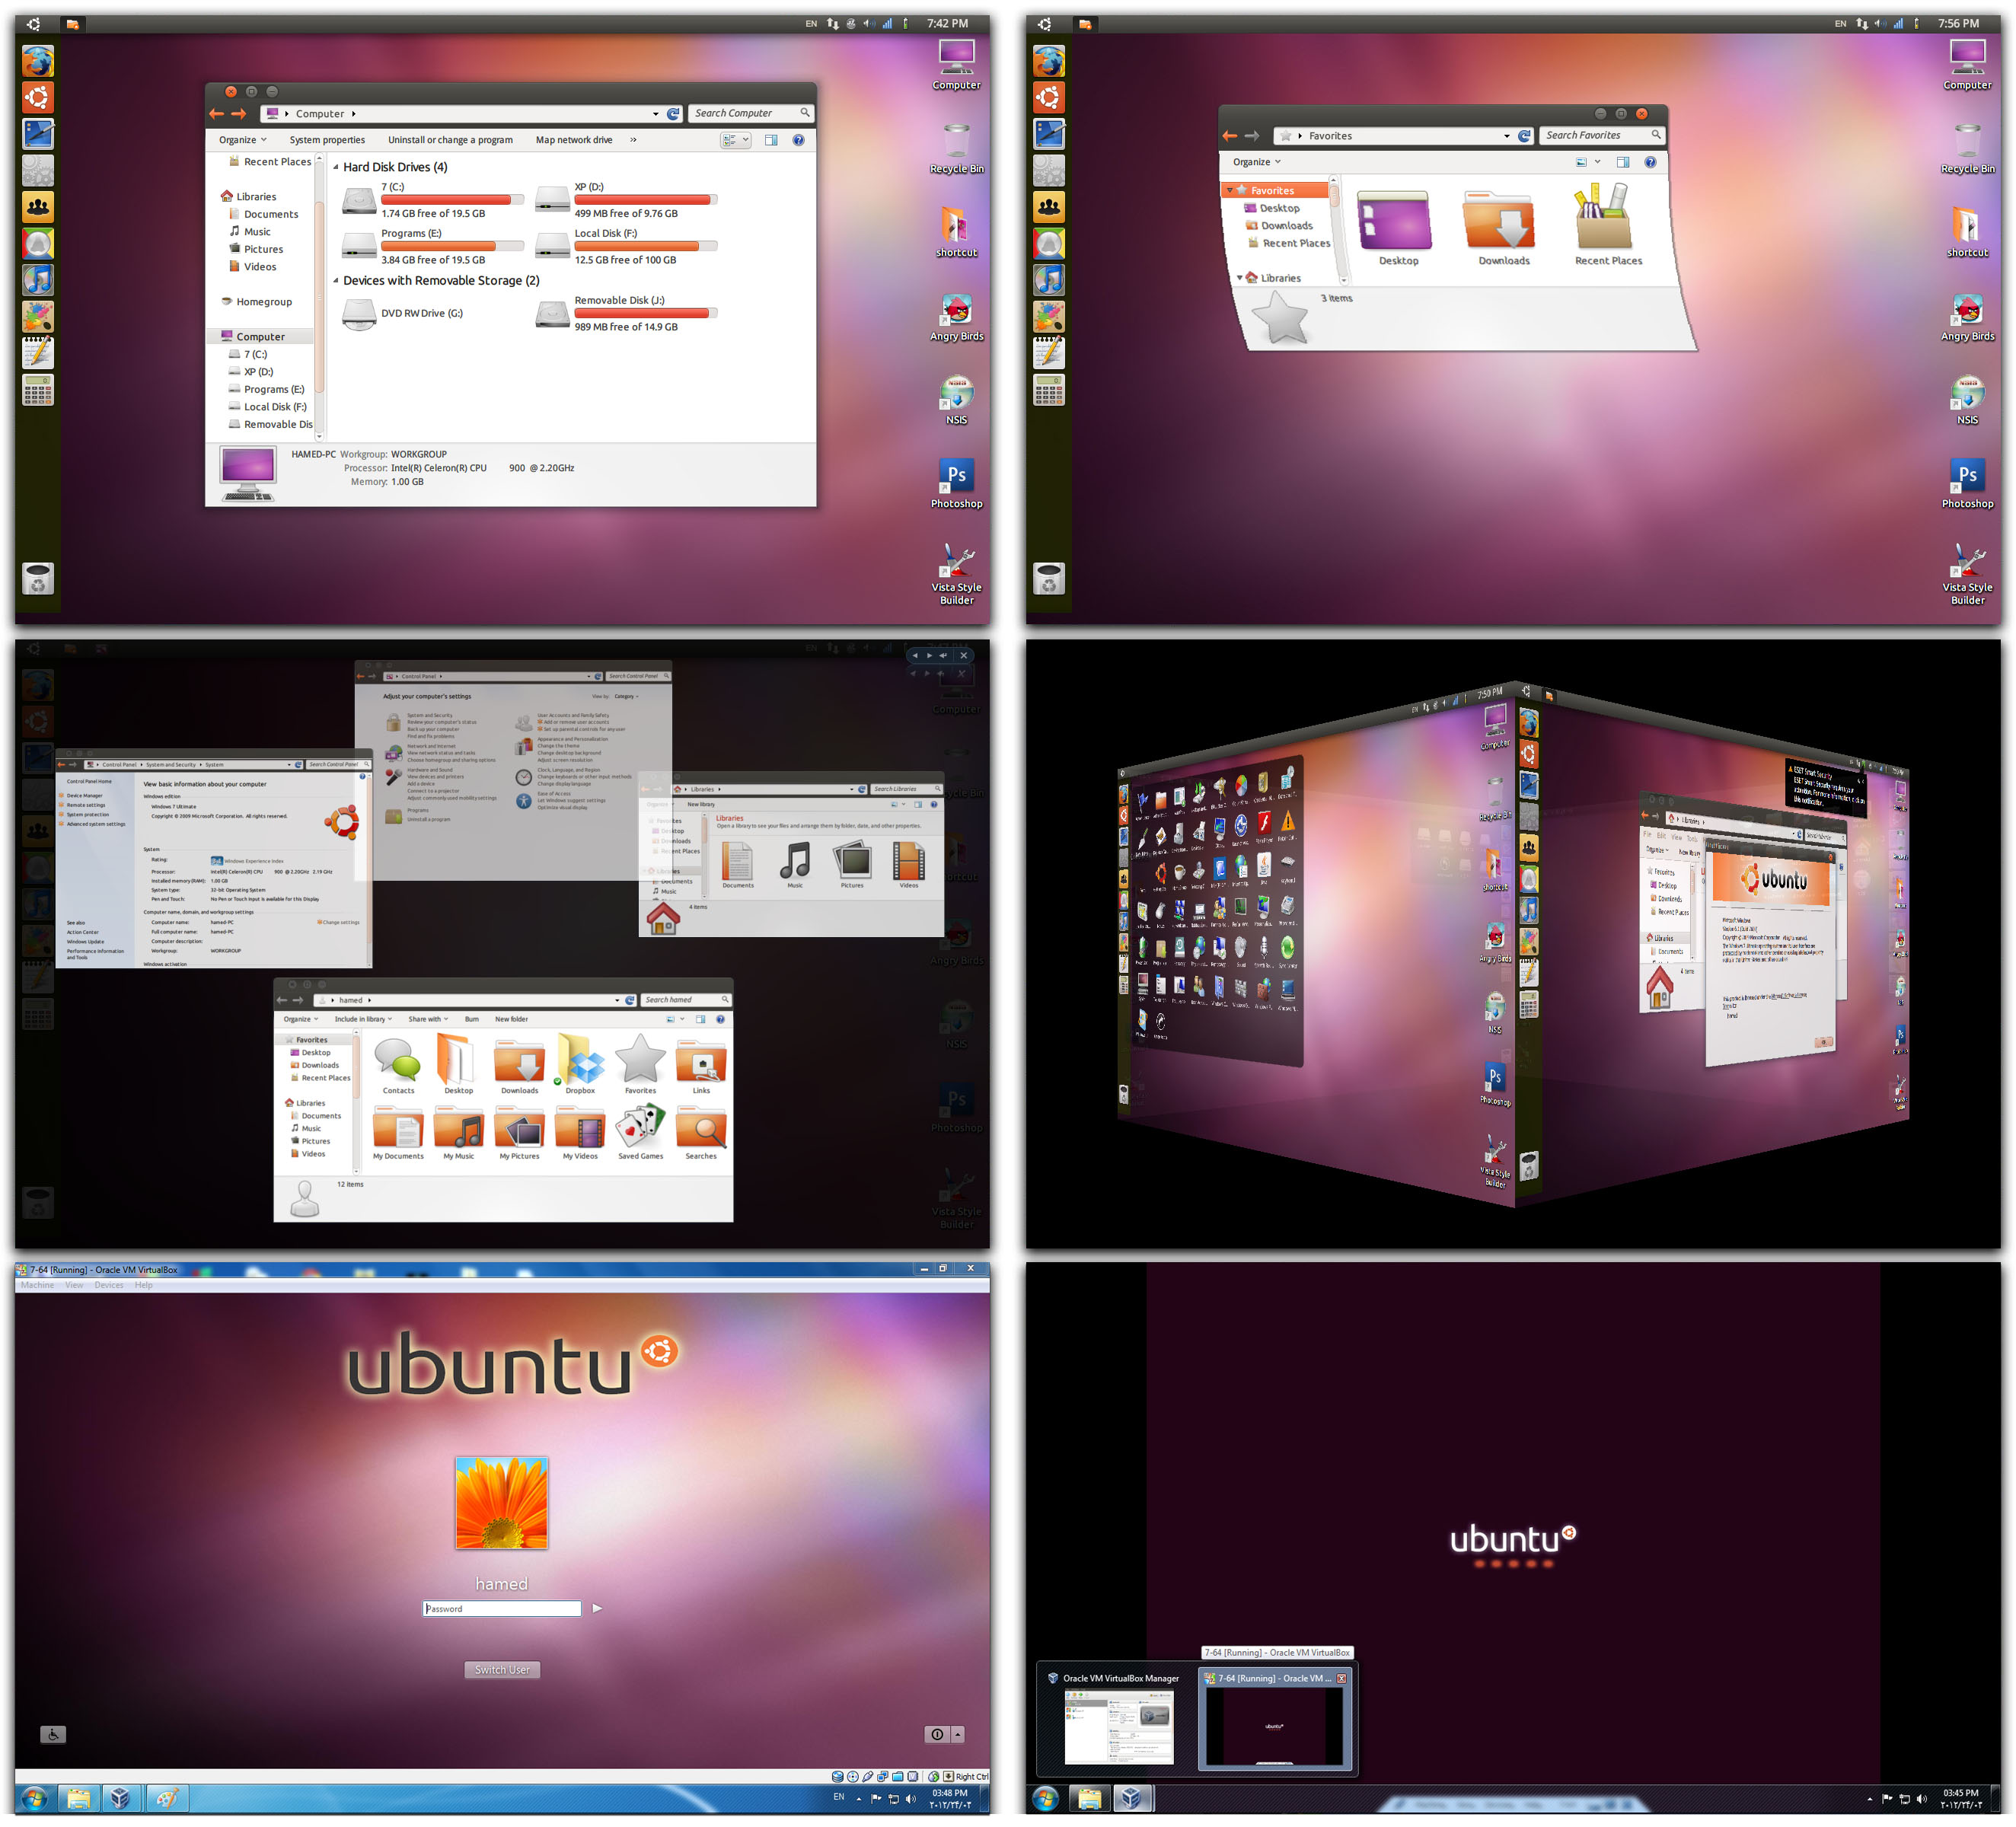 Download Ubuntu Skin Pack 9.0 For Windows 7 64 Bit